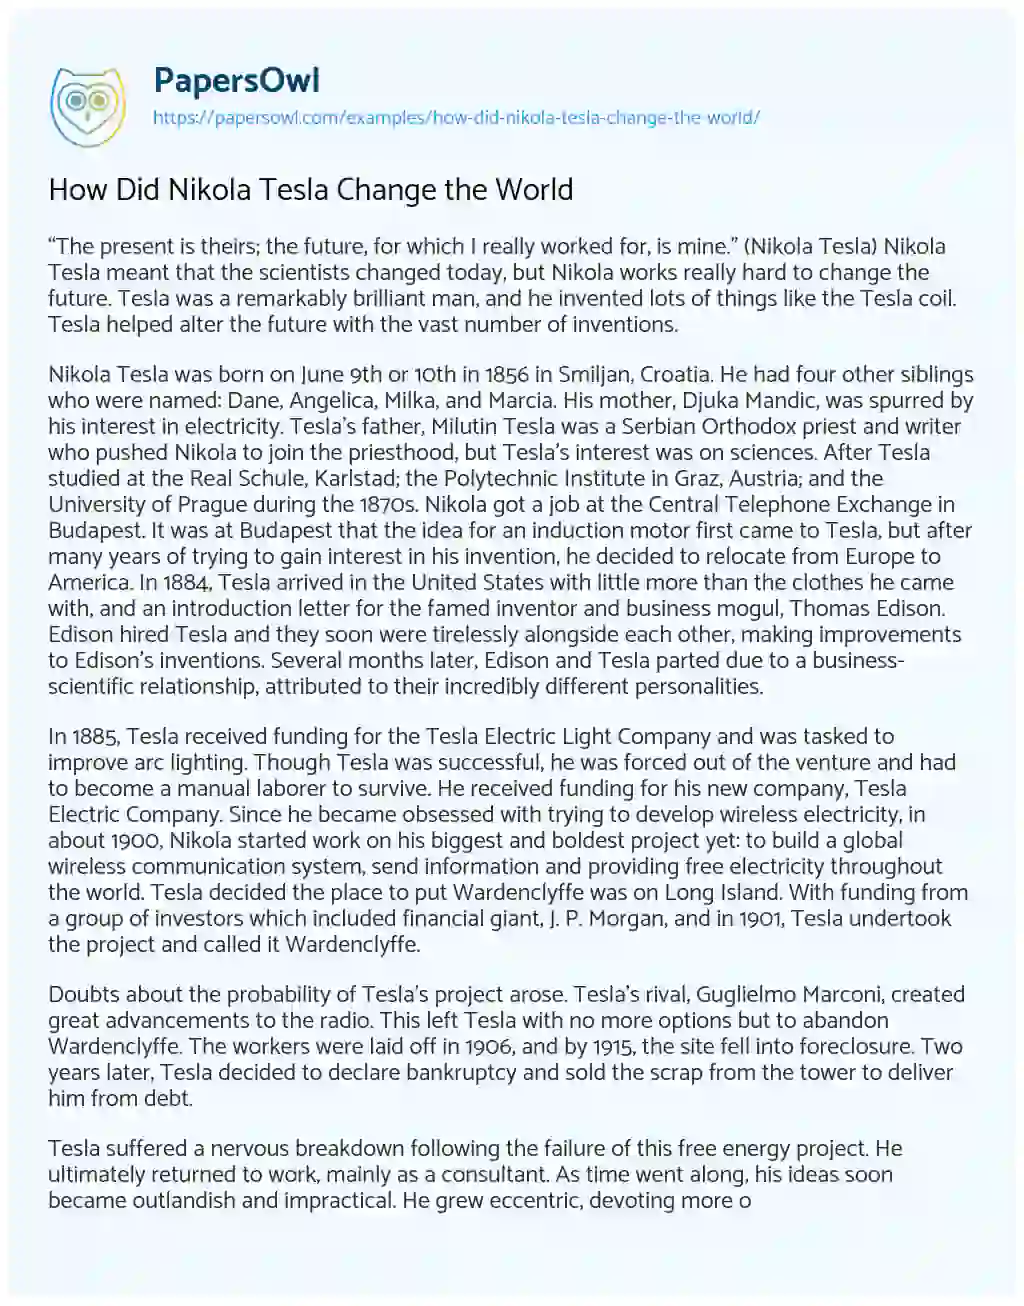 How did Nikola Tesla Change the World essay